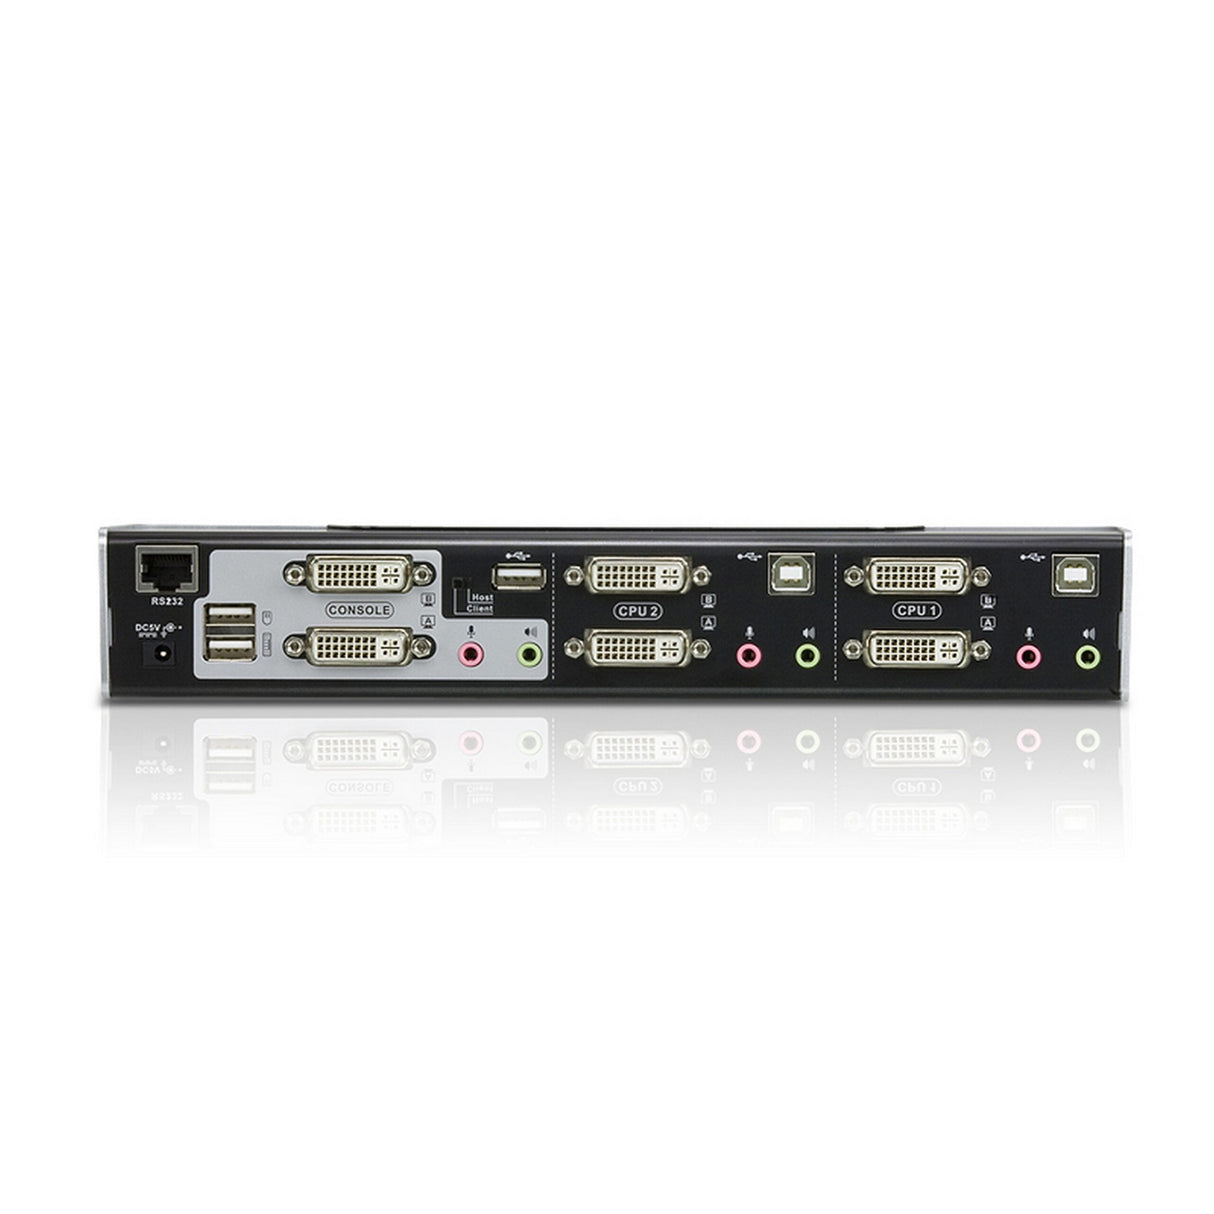 ATEN CS1642A 2-Port USB DVI Dual Link Dual Display/Audio KVMP Switch